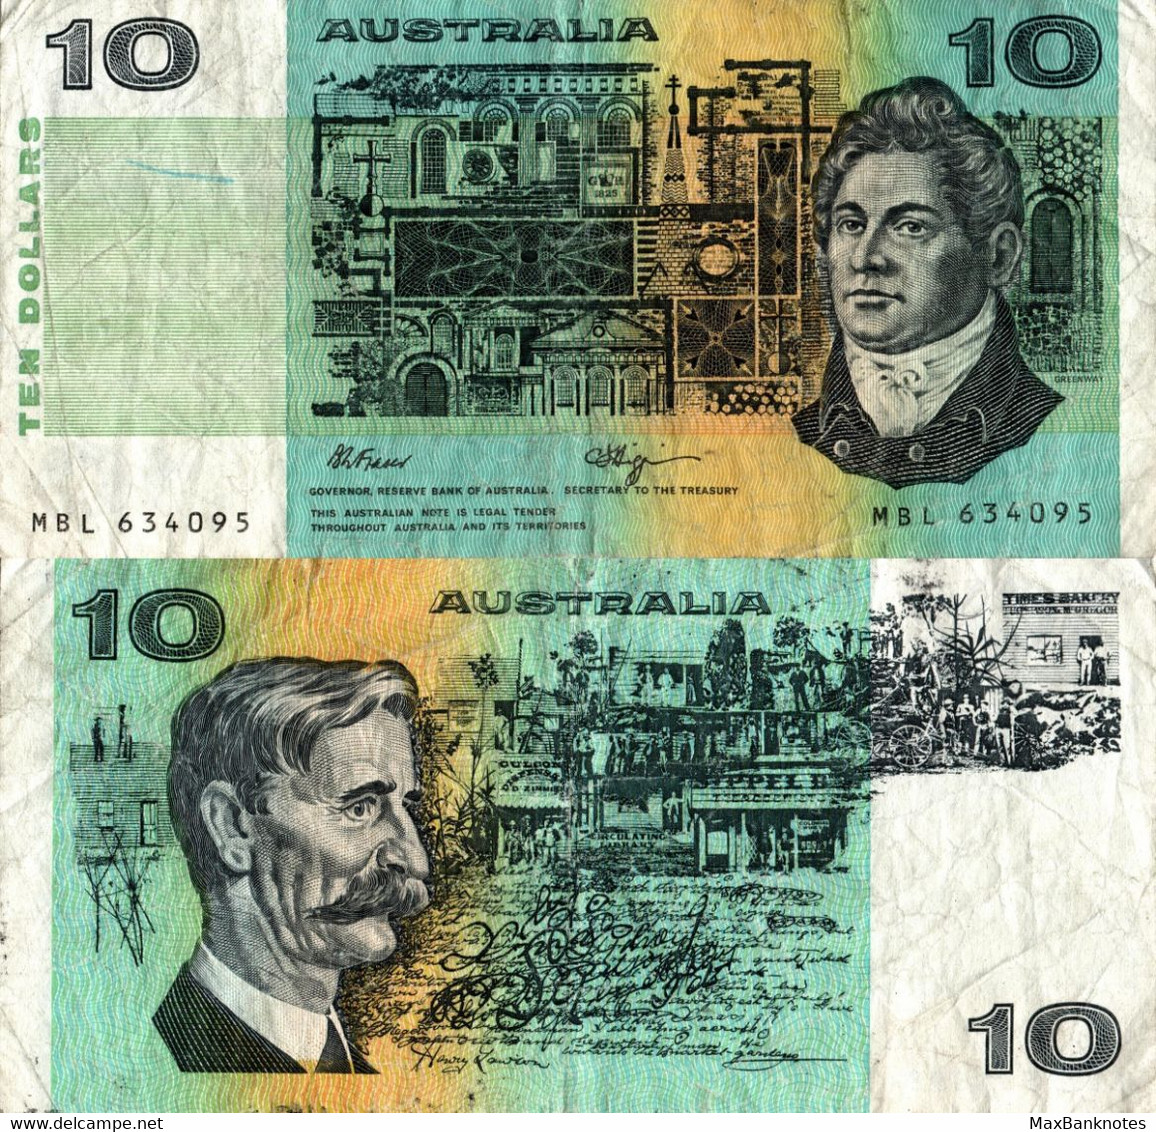 Australia / 10 Dollars / 1974 / P-45(f) / FI - 1974-94 Australia Reserve Bank